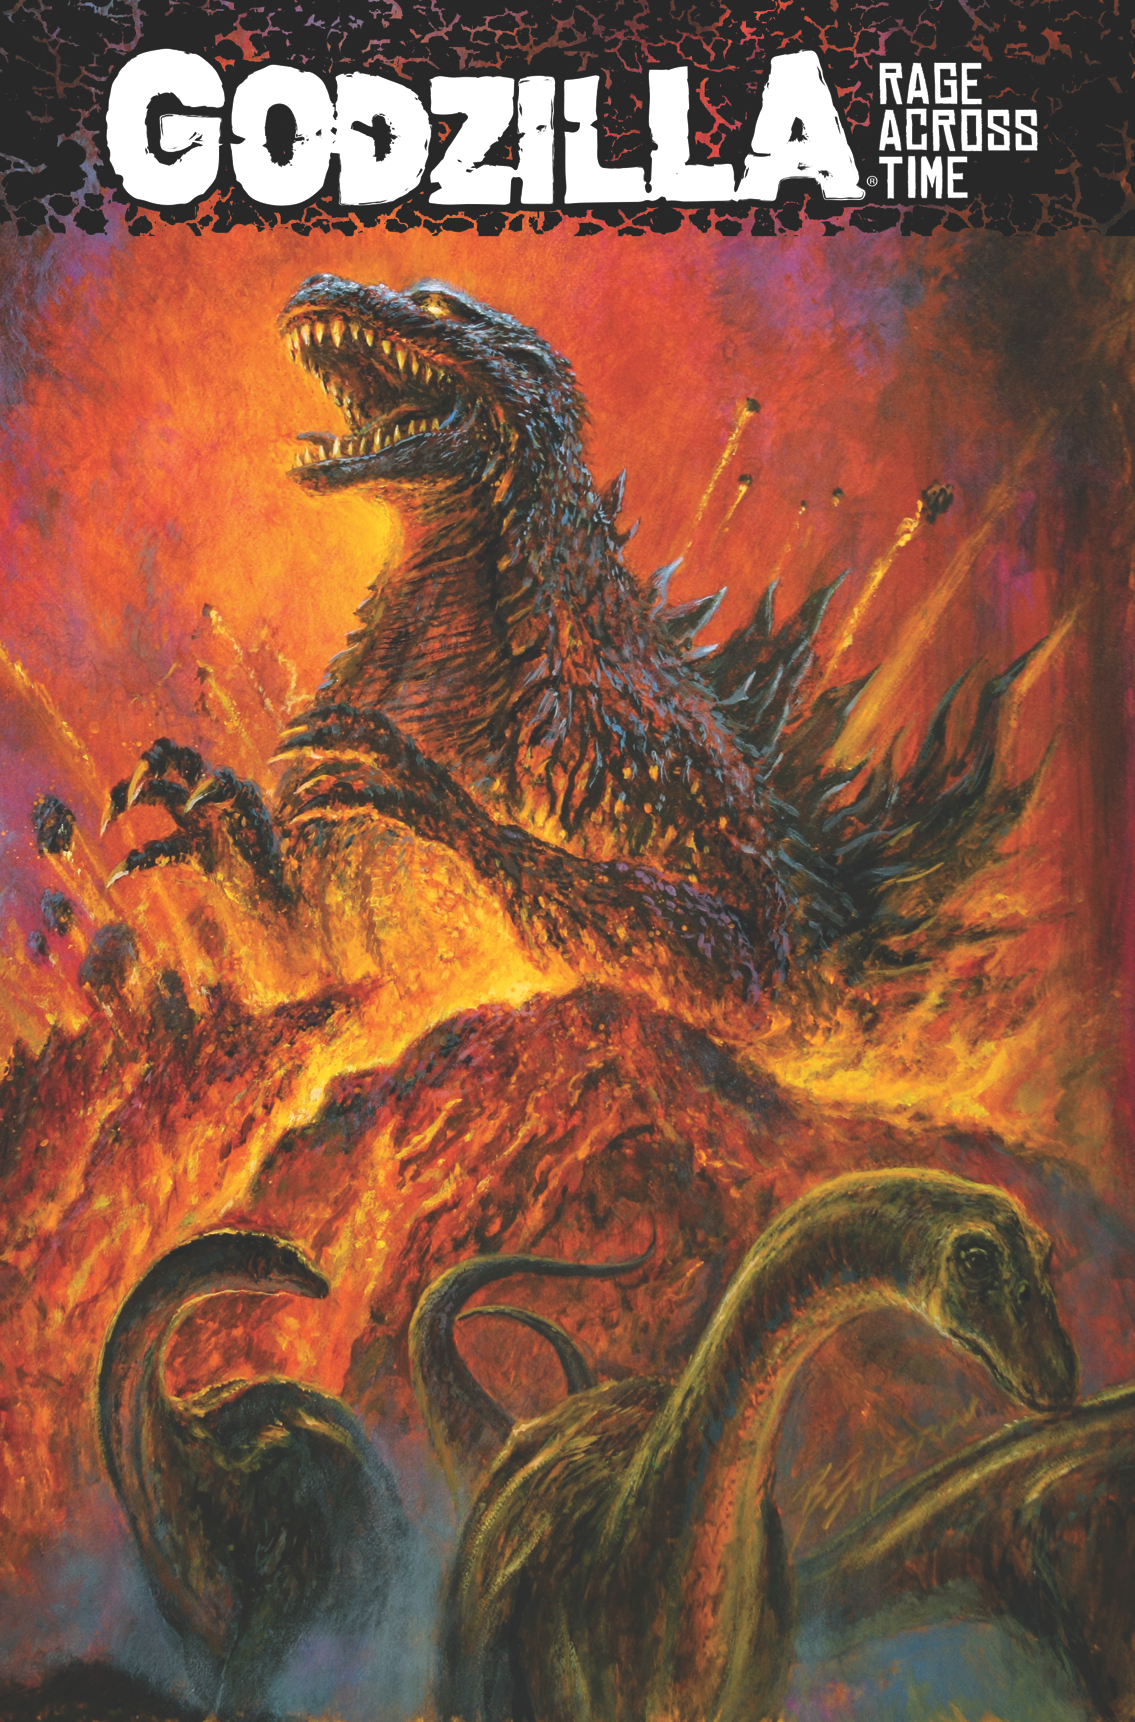 Godzilla Rage Across Time TP